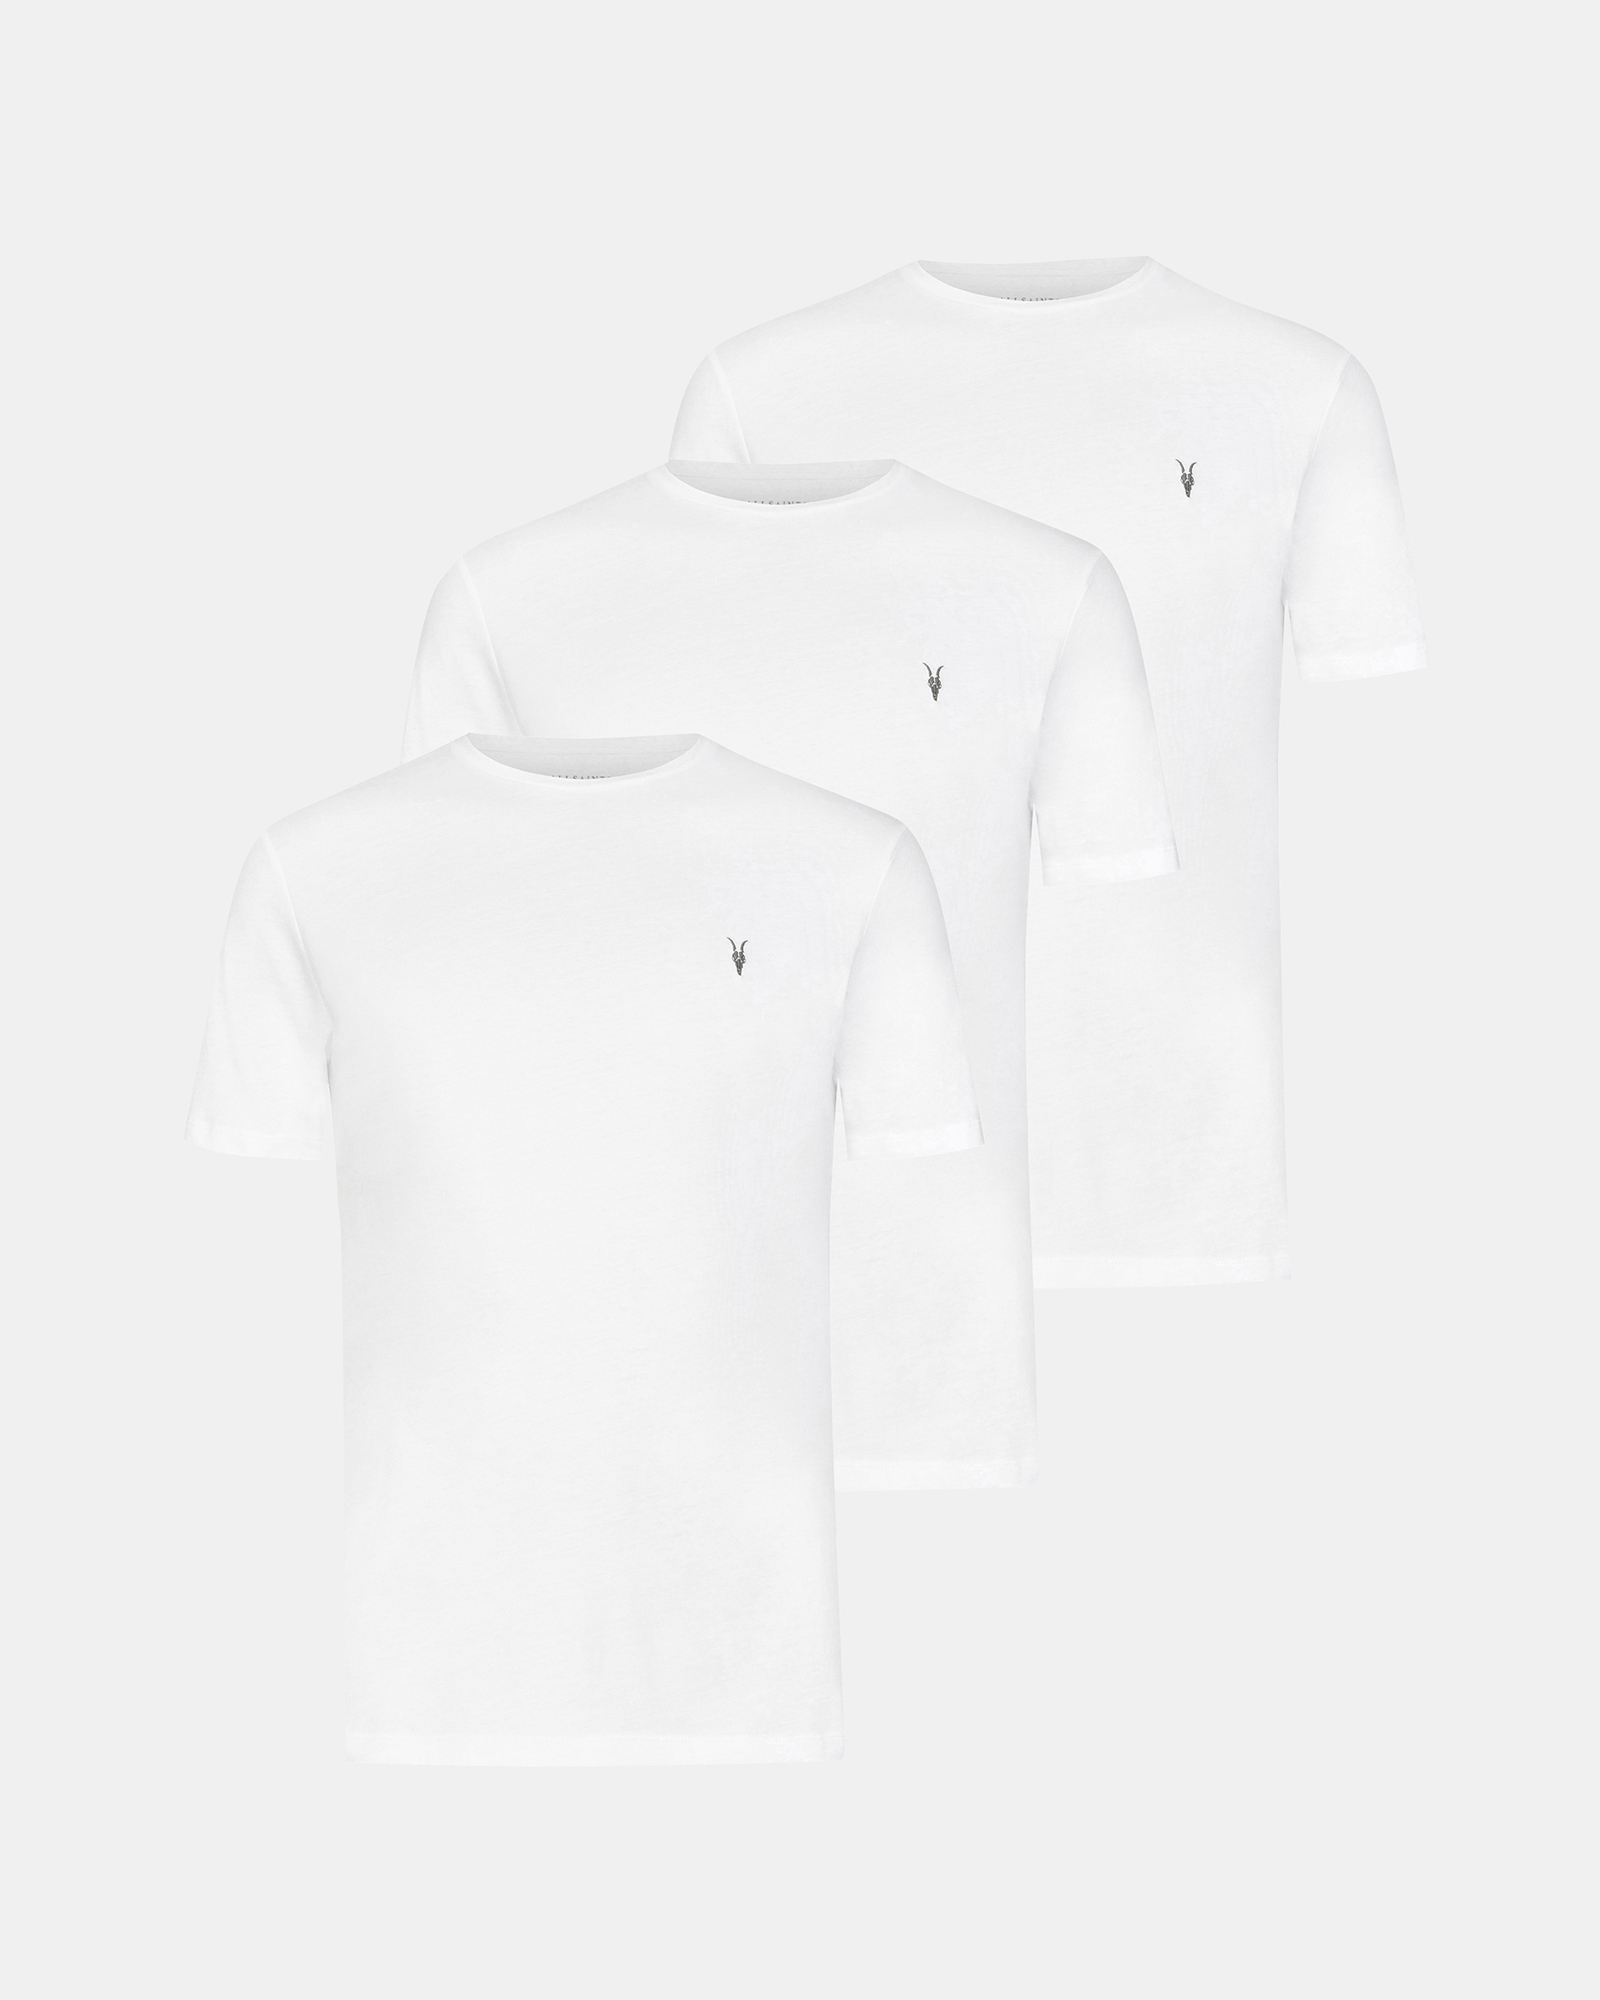 AllSaints Men's Cotton Brace Tonic 3 Pack T-Shirts, White, Size: XL